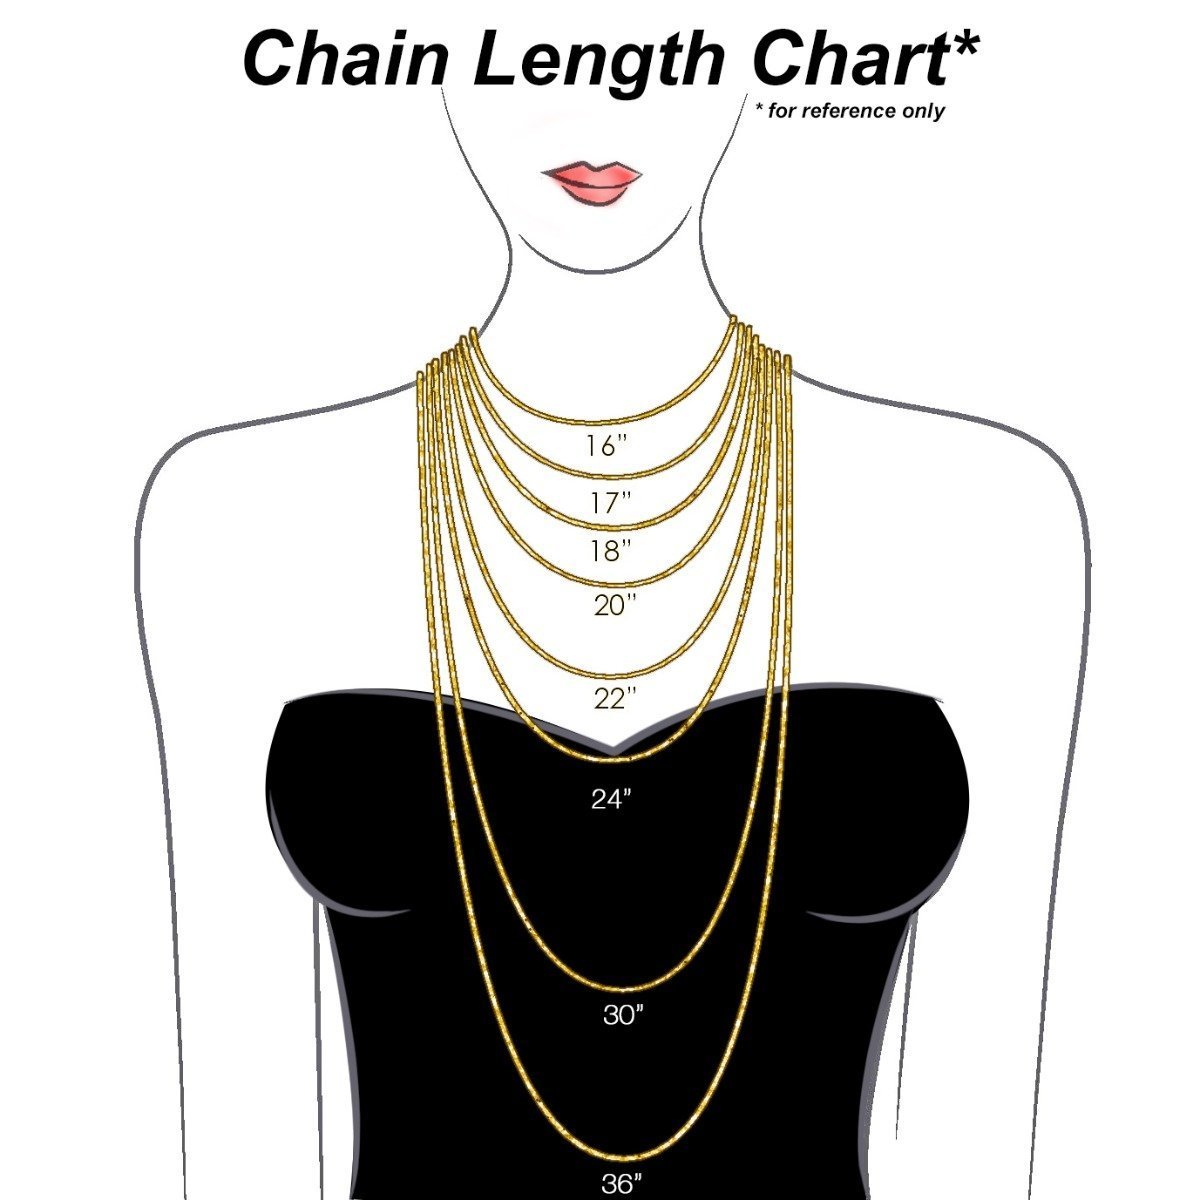 Kendra Scott Etta Rhodium Over Brass Chain Necklace - Silver : Target